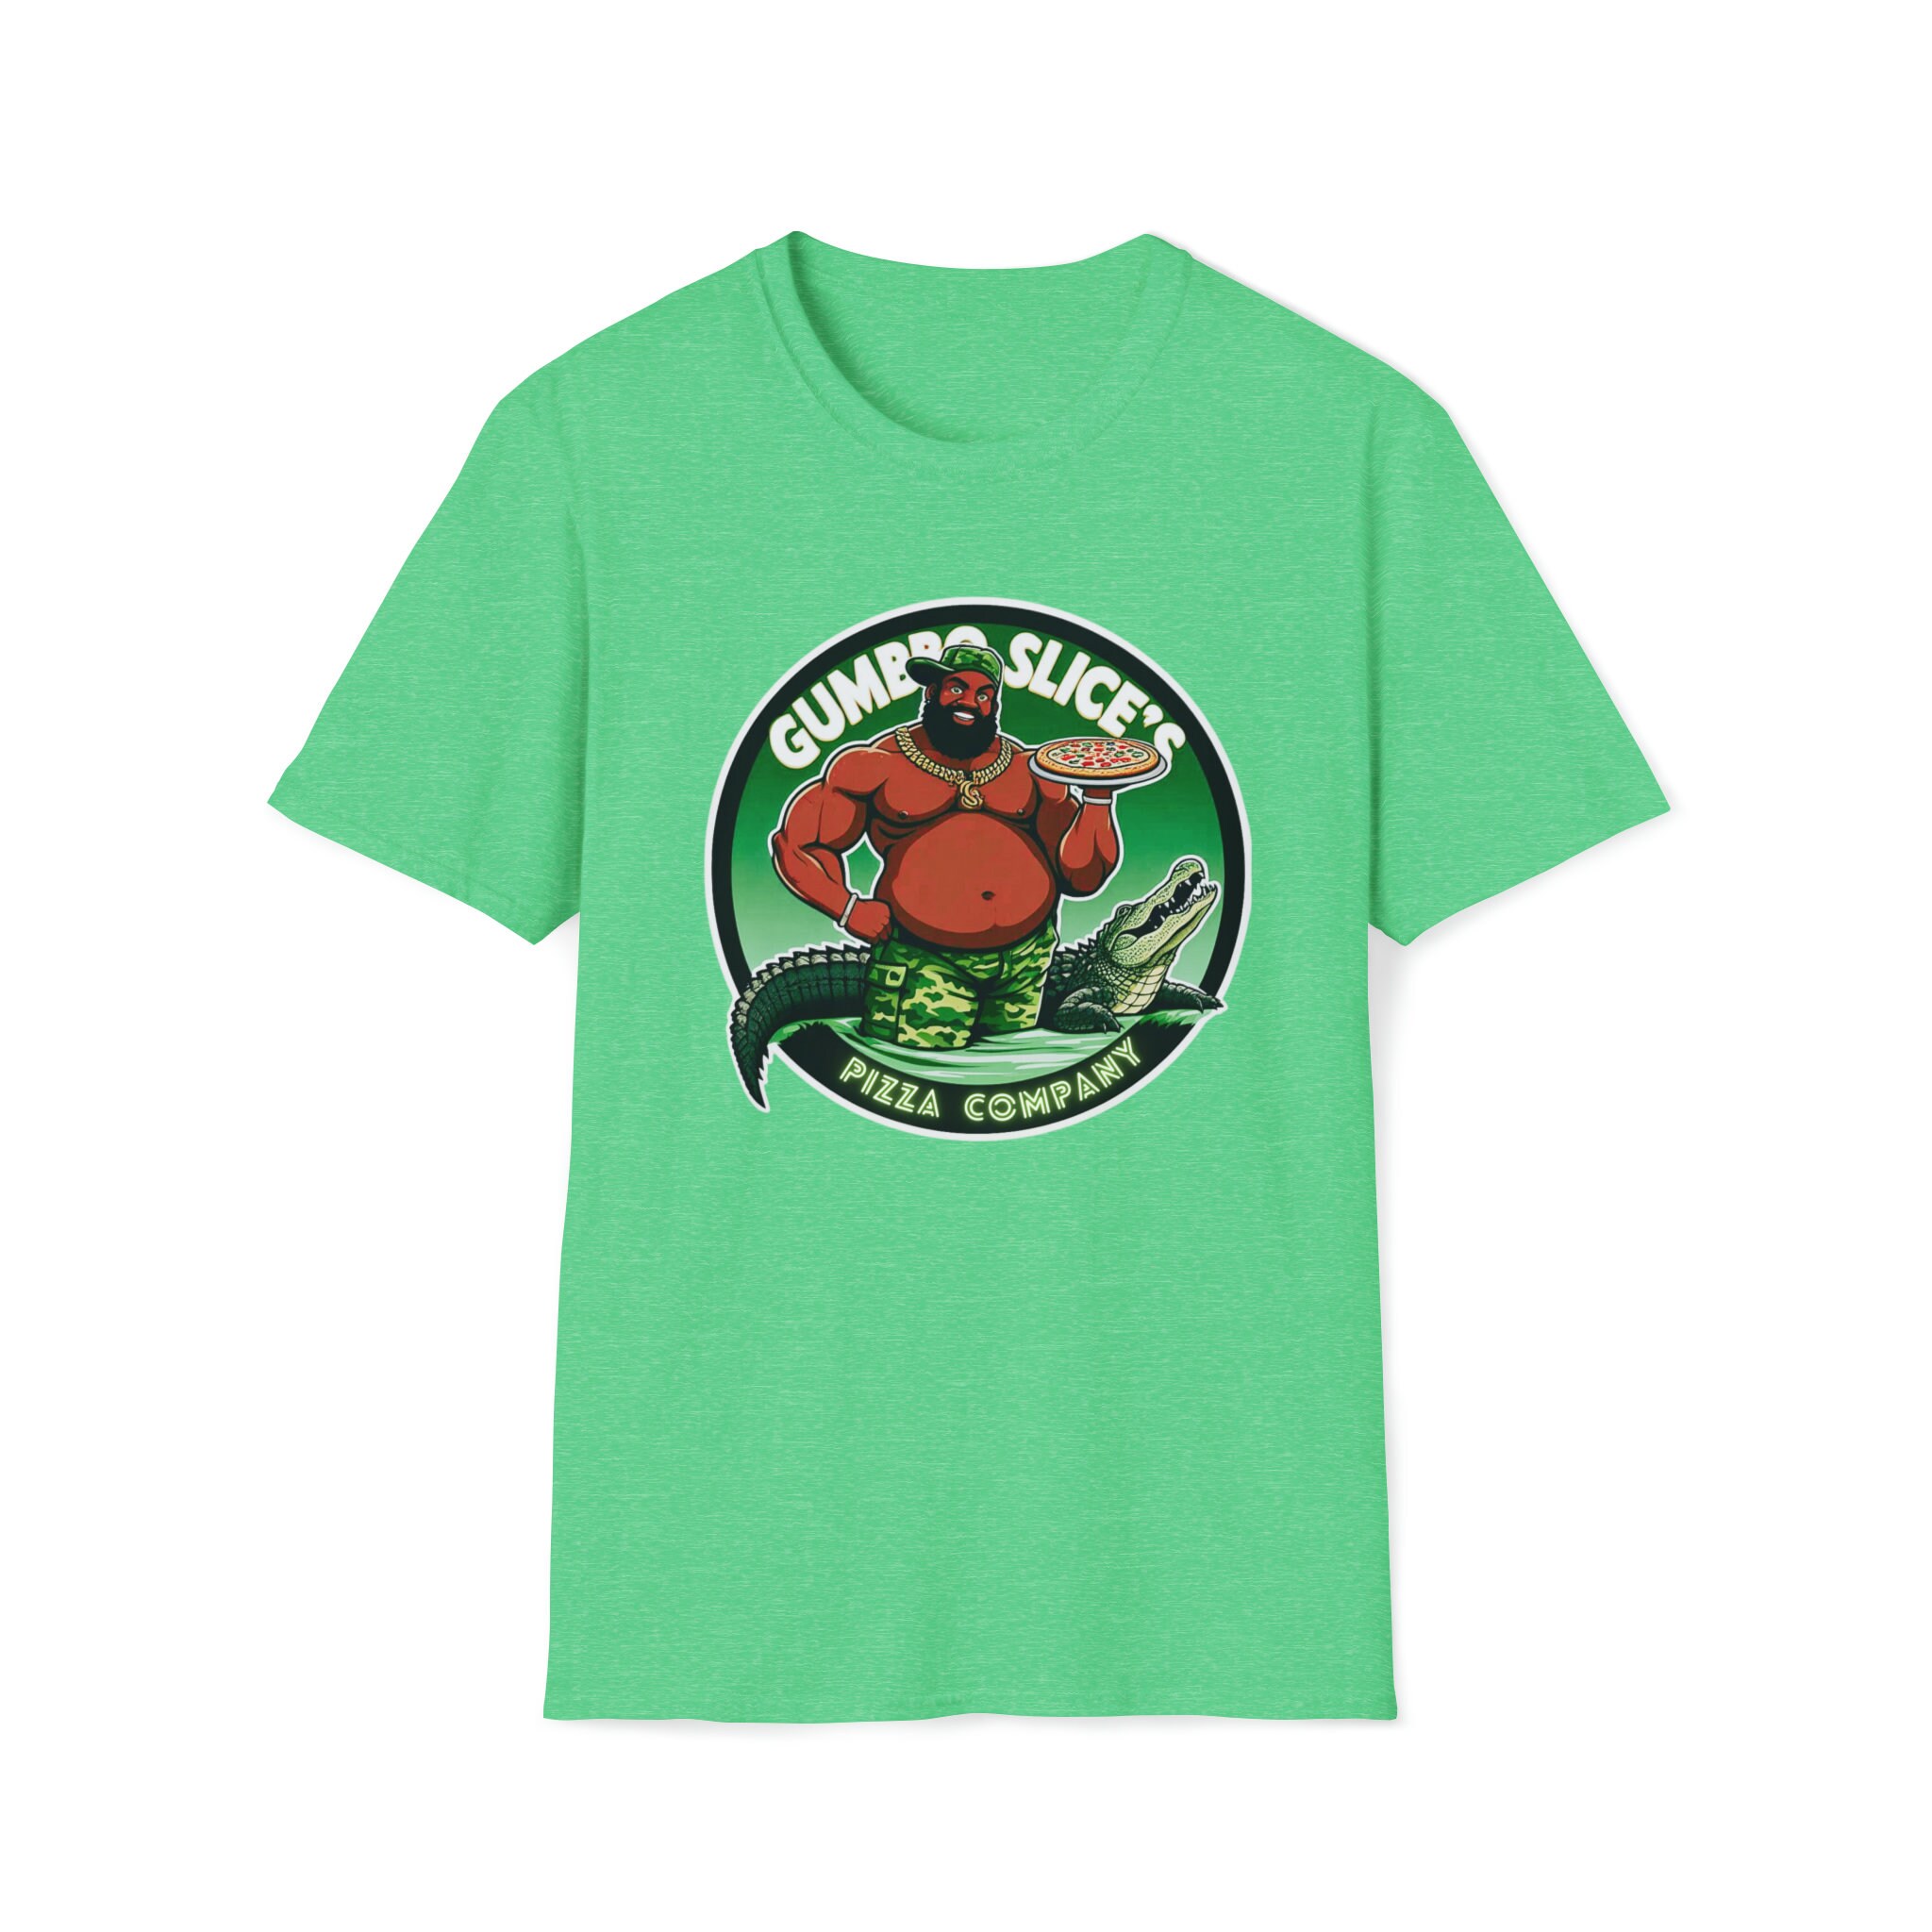 Gumbo T-Shirt Co Louisiana Saturday Night T-Shirt 4XL / Canvas Red